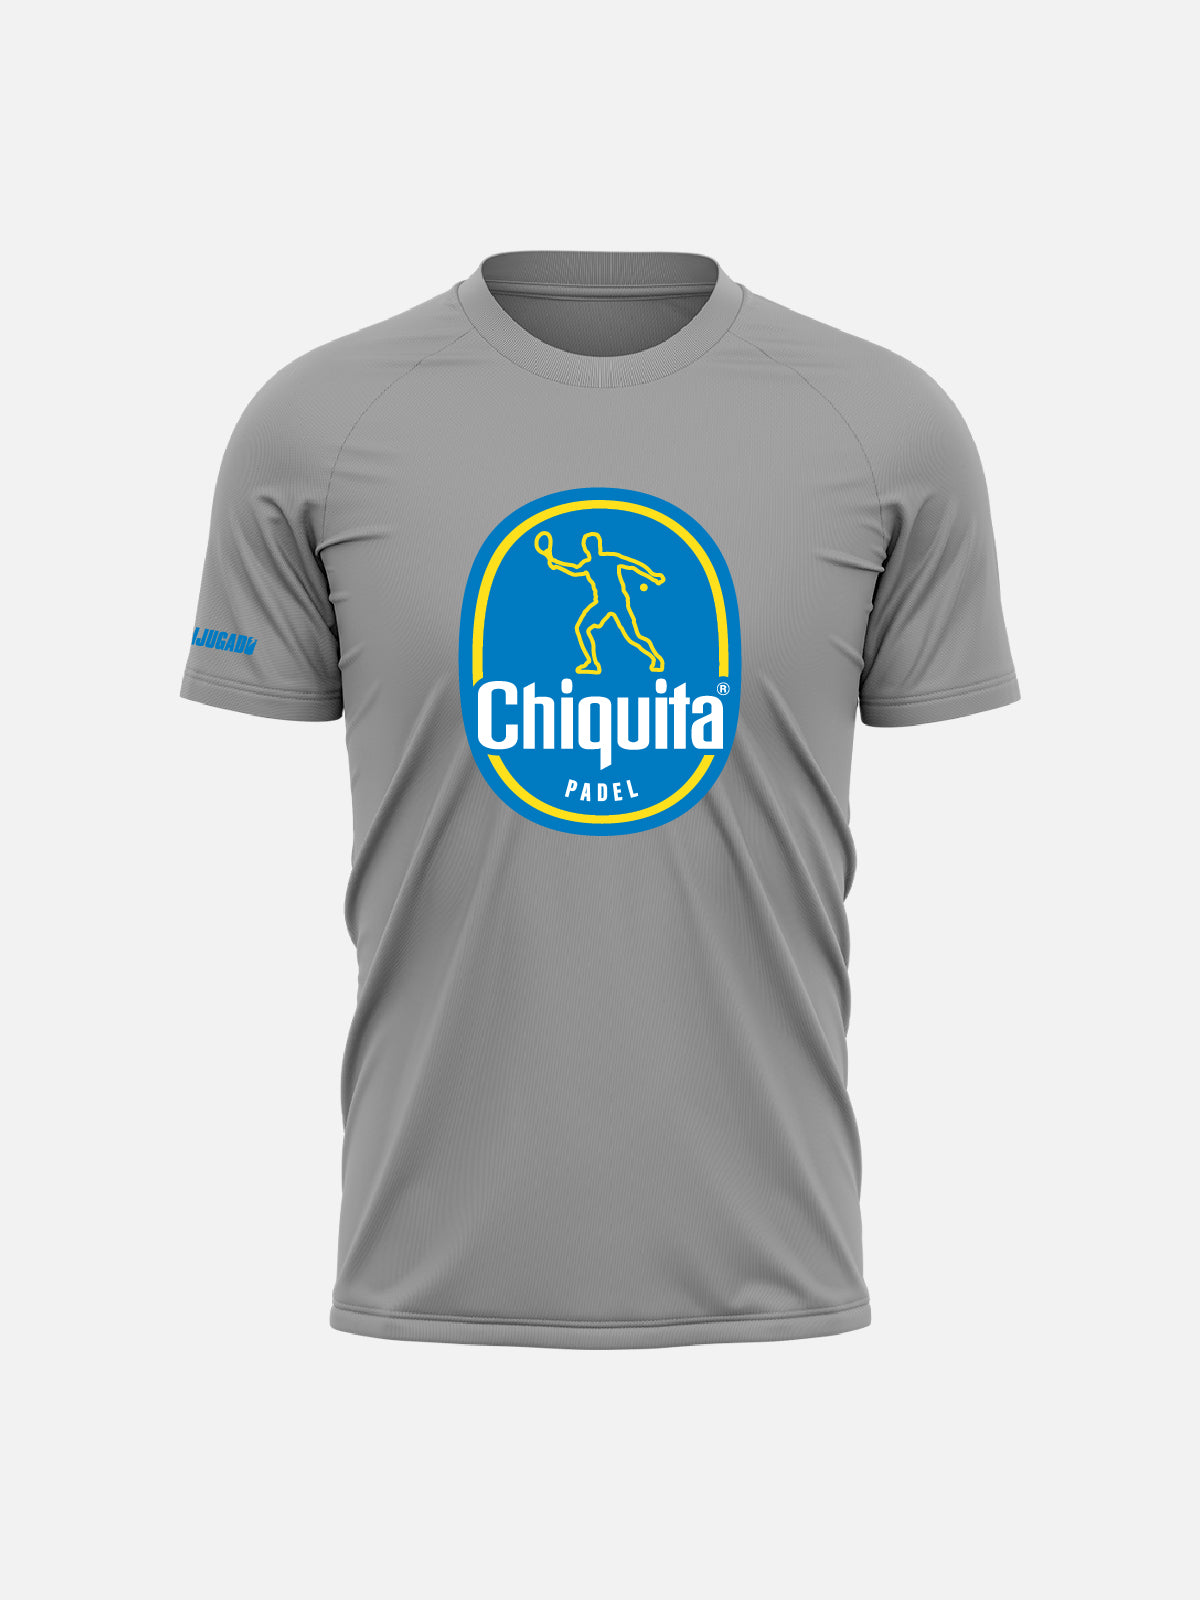 Fun Quick Dry T-Shirt - Chiquita